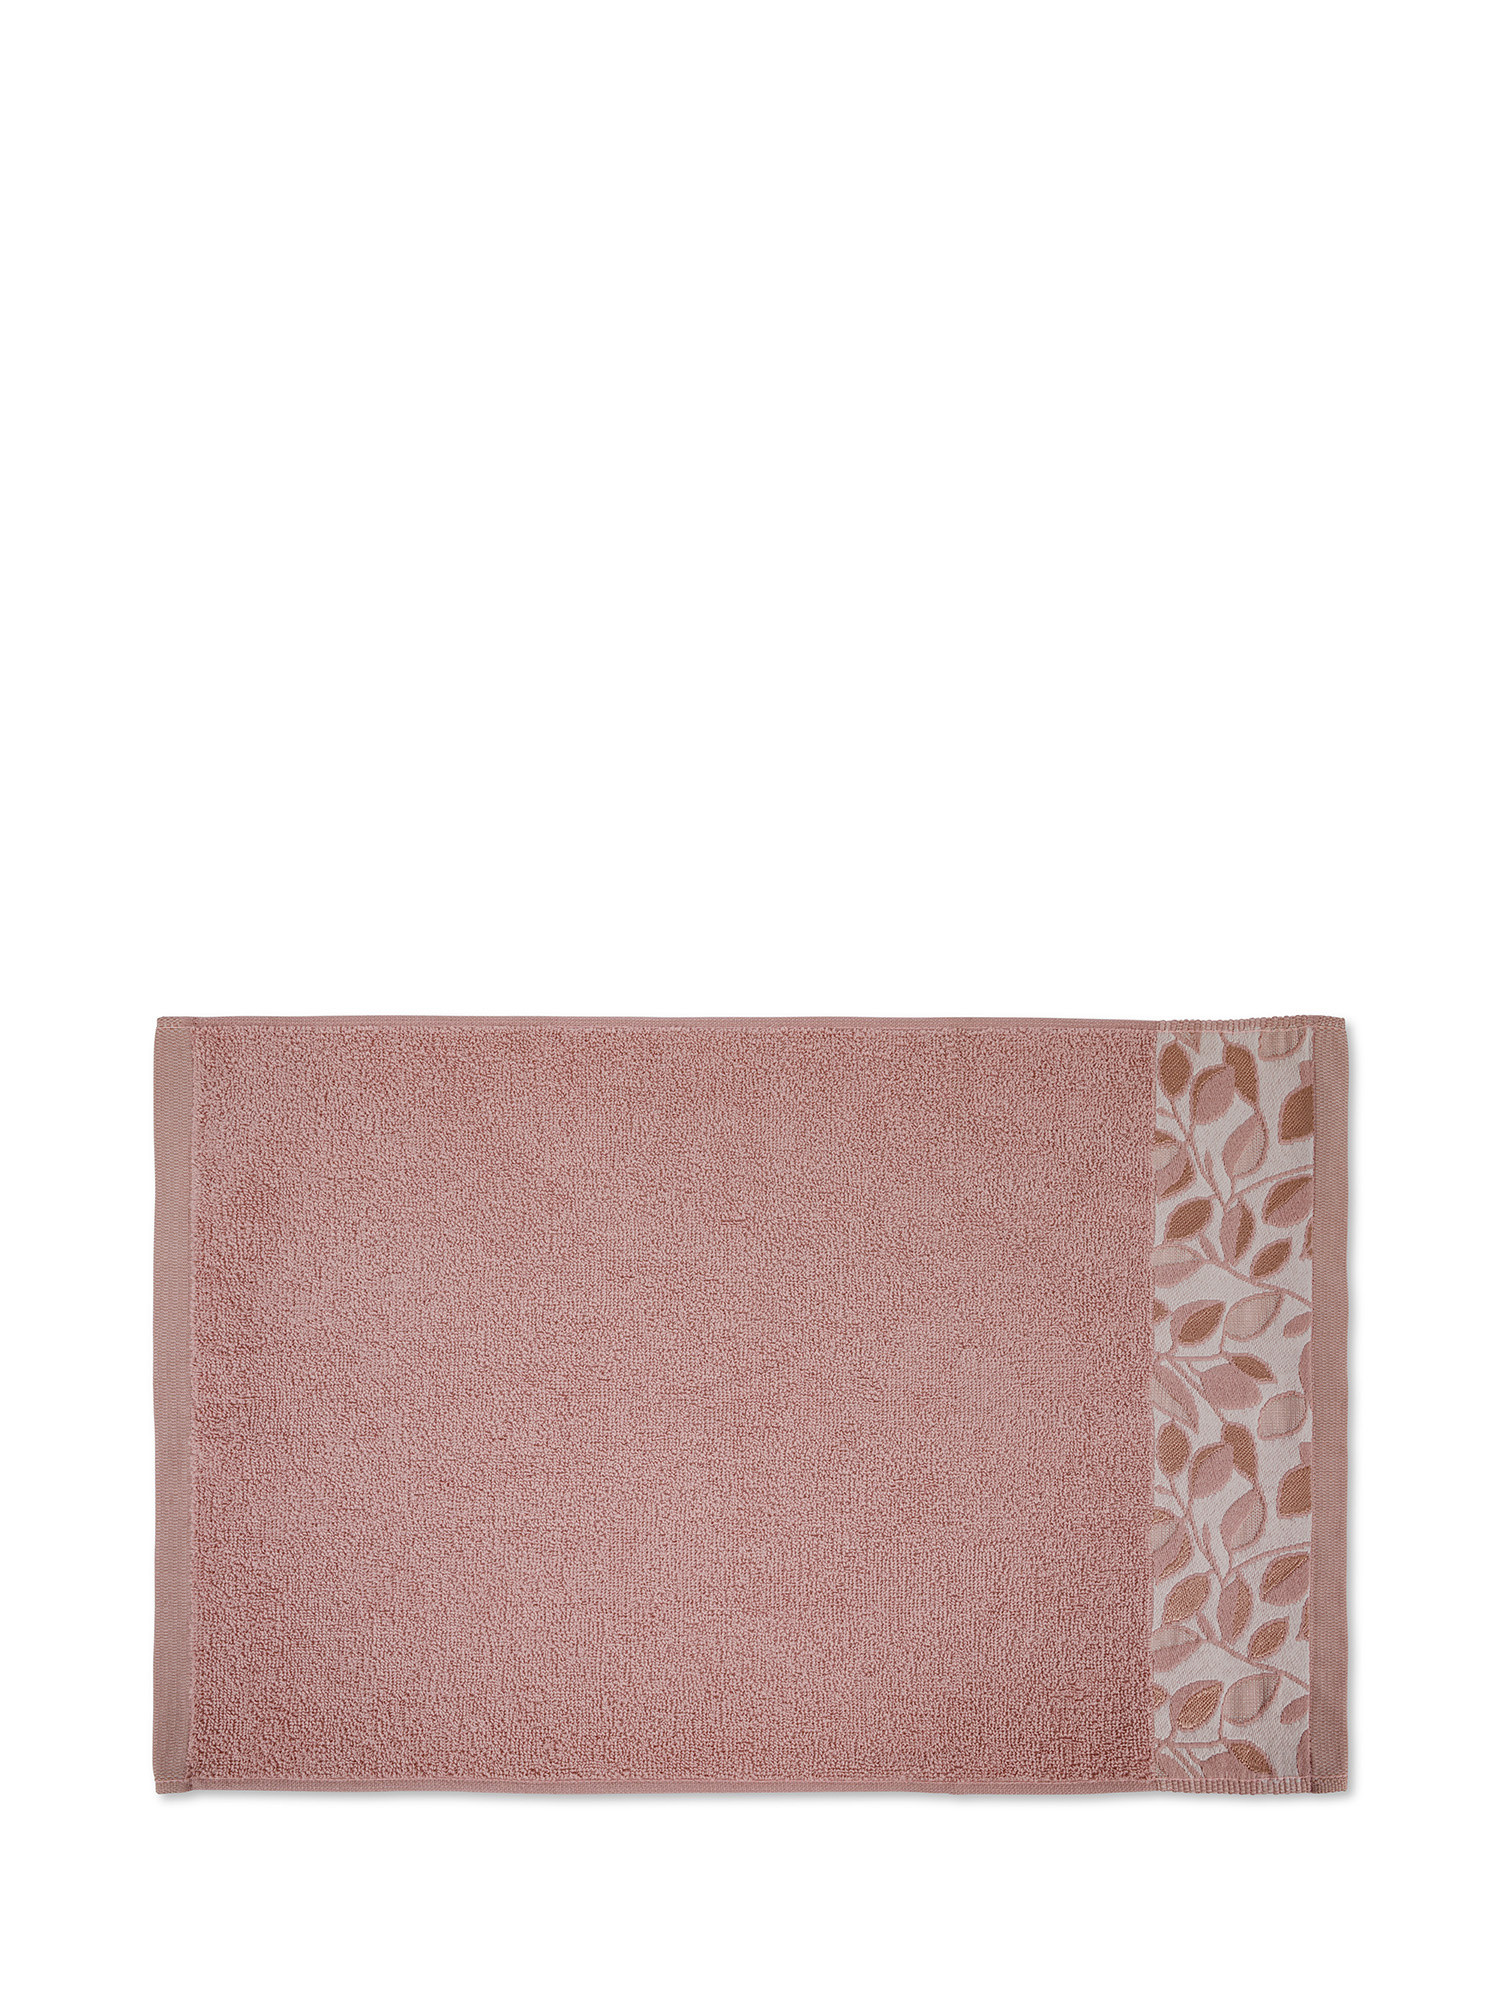 Asciugamano in spugna di puro cotone motivo foglie, Rosa, large image number 1